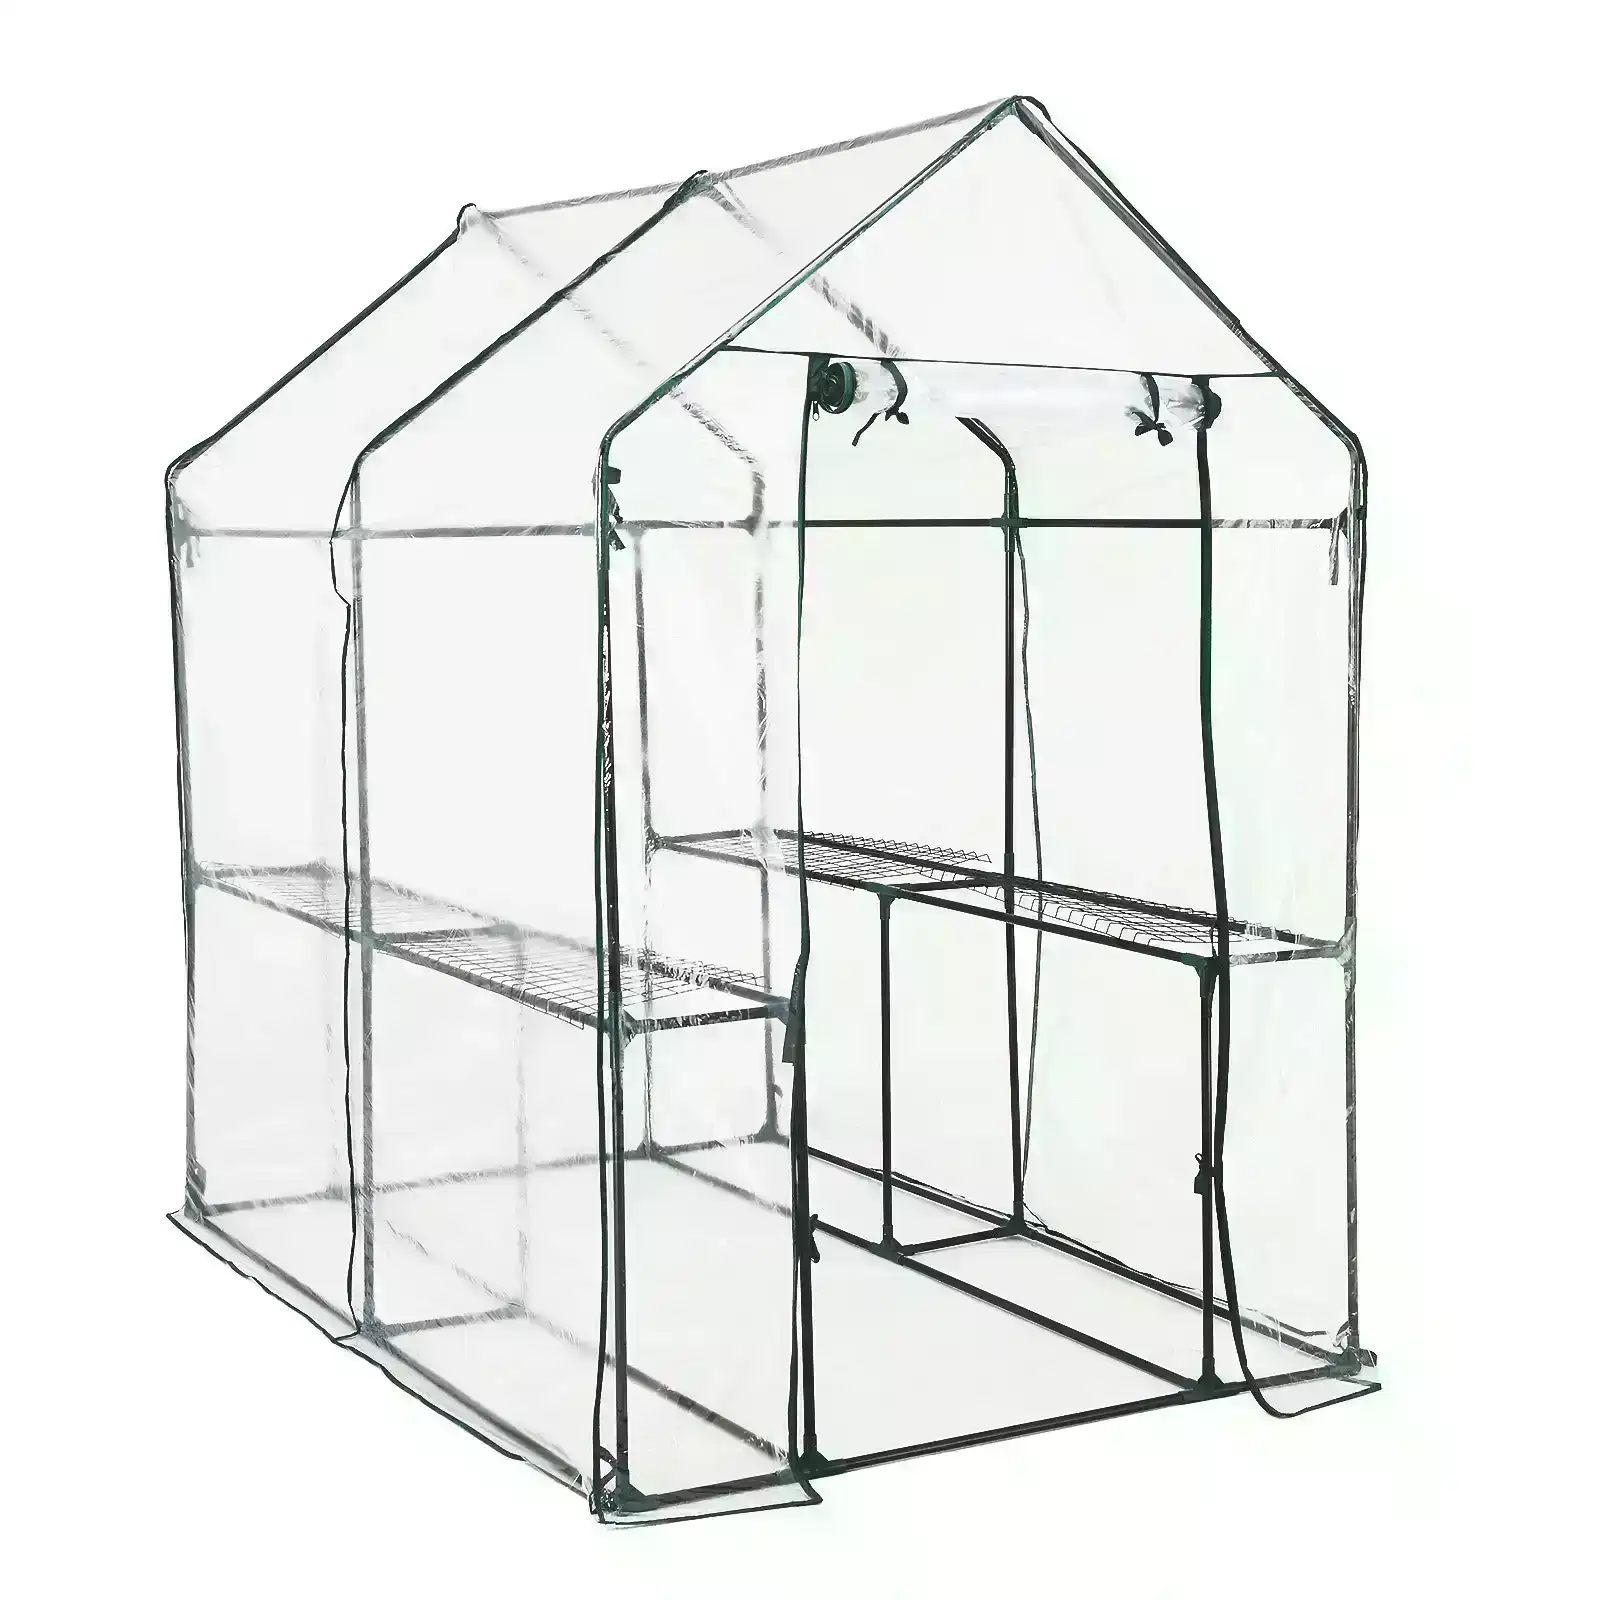 1.9x1.2x1.9M Greenhouse PVC Apex Roof - CLEAR